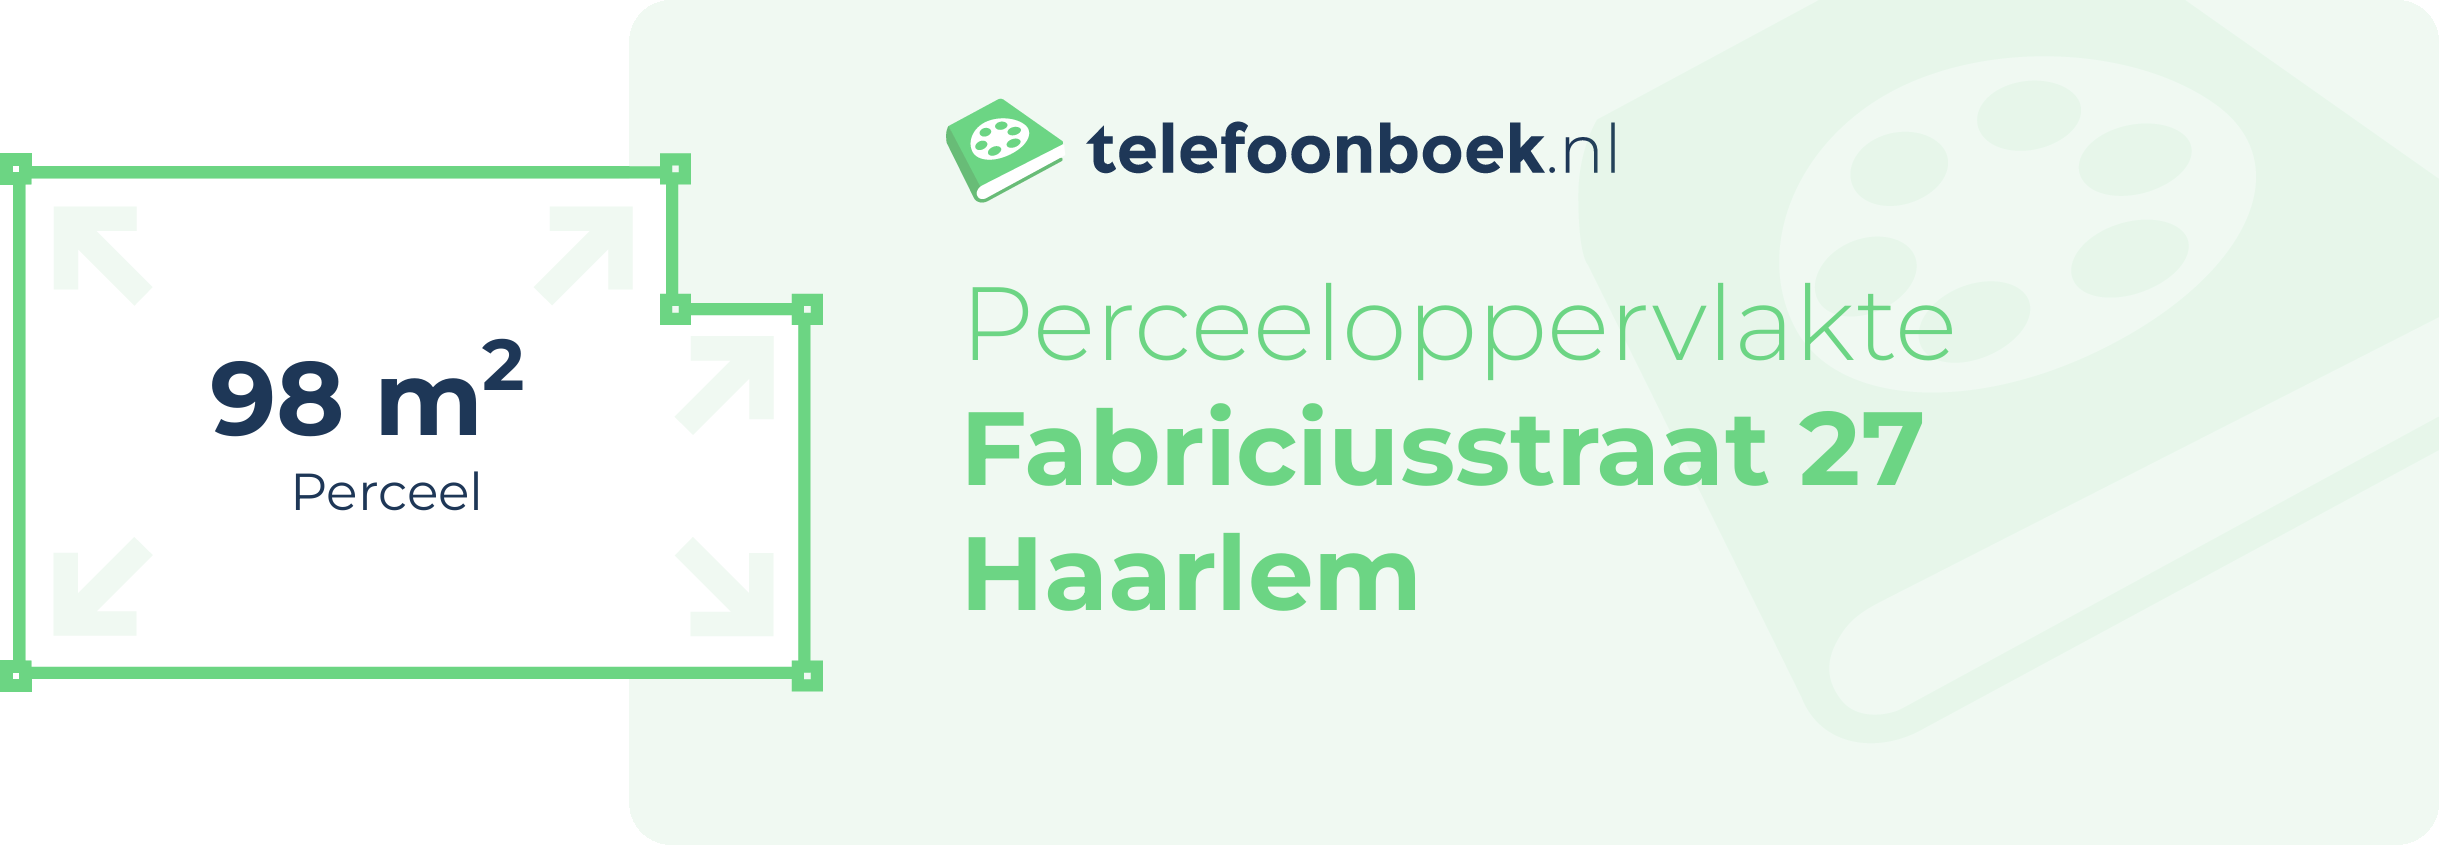 Perceeloppervlakte Fabriciusstraat 27 Haarlem